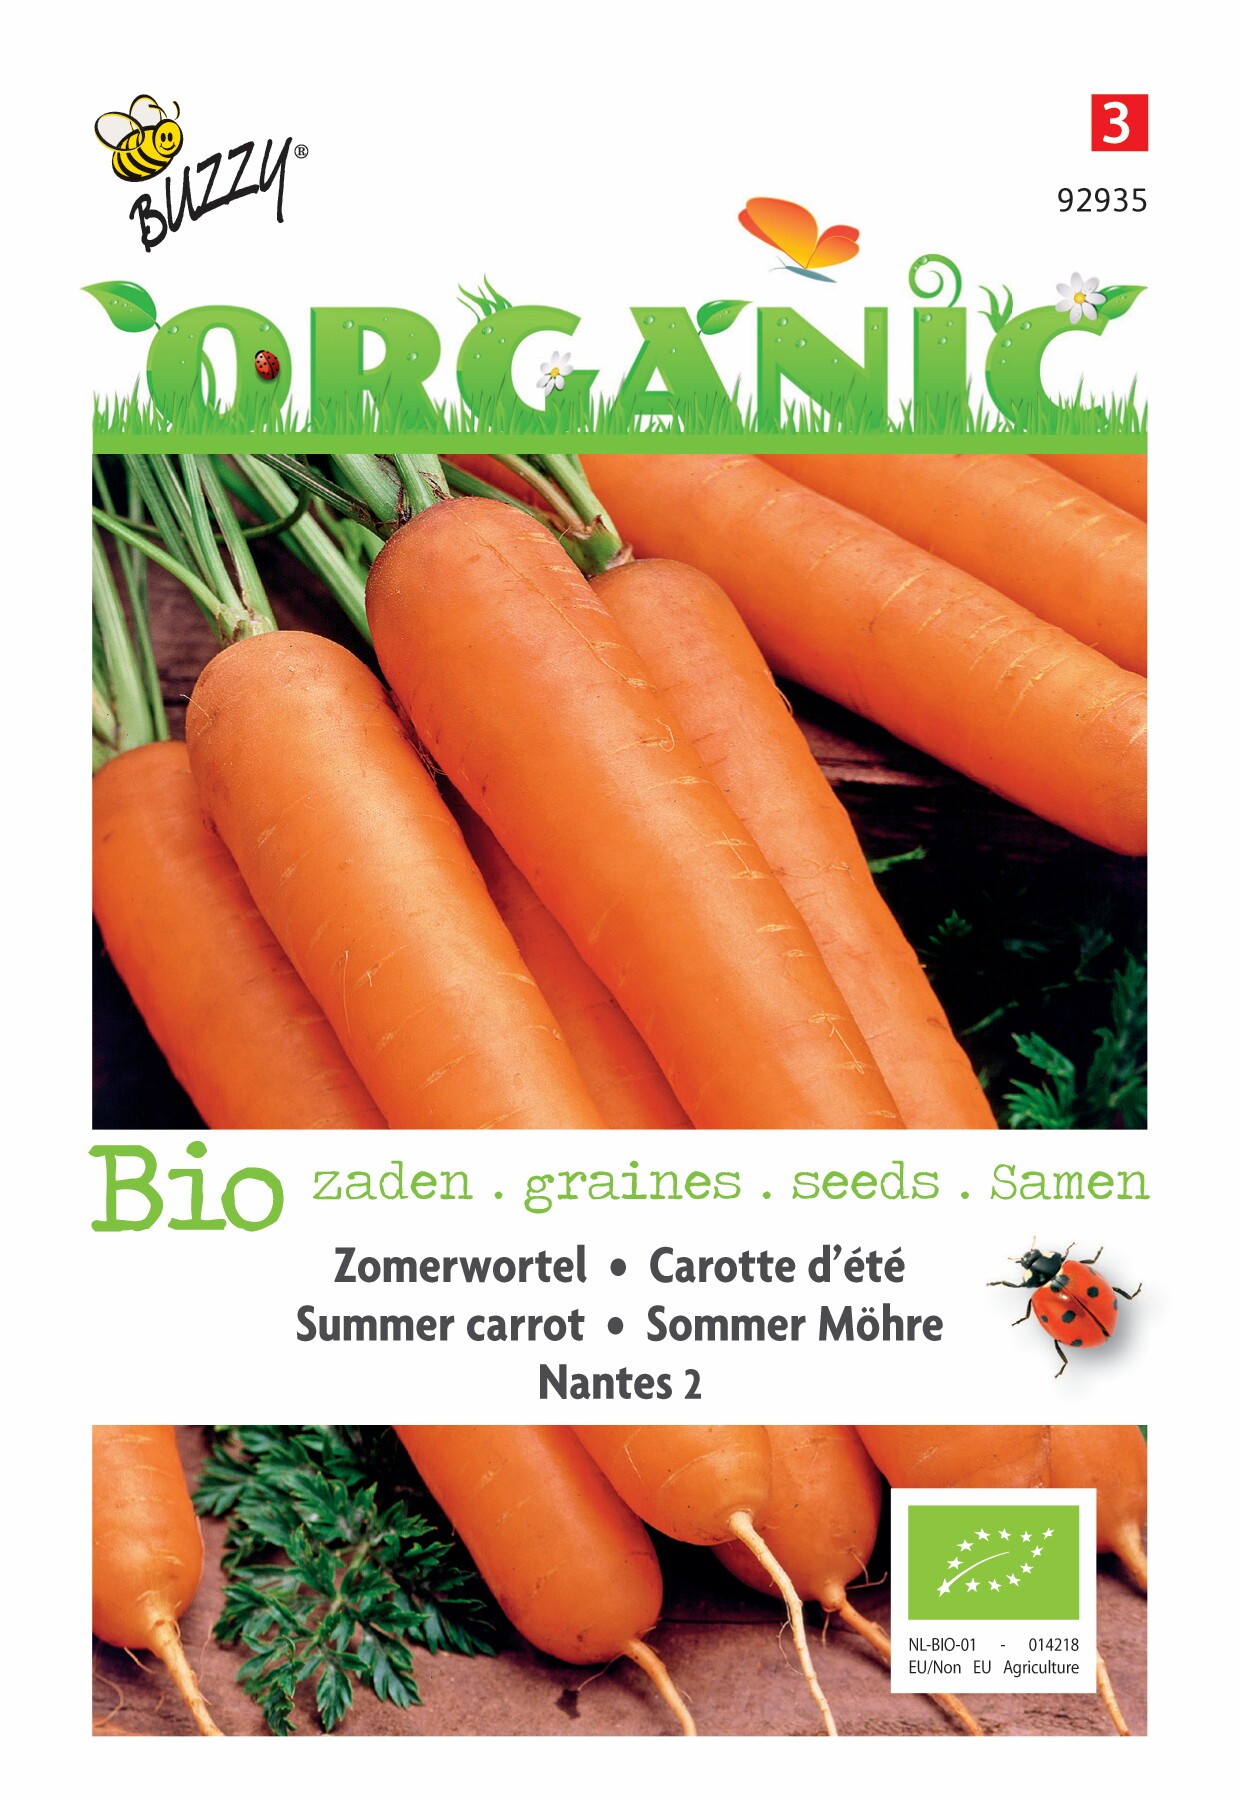 https://www.warentuin.nl/media/catalog/product/1/7/1778711117929352_buzzy_bio_organic_tuinzaden_buzzy_organic_zomerwortelen_nantes_bdb9.jpeg